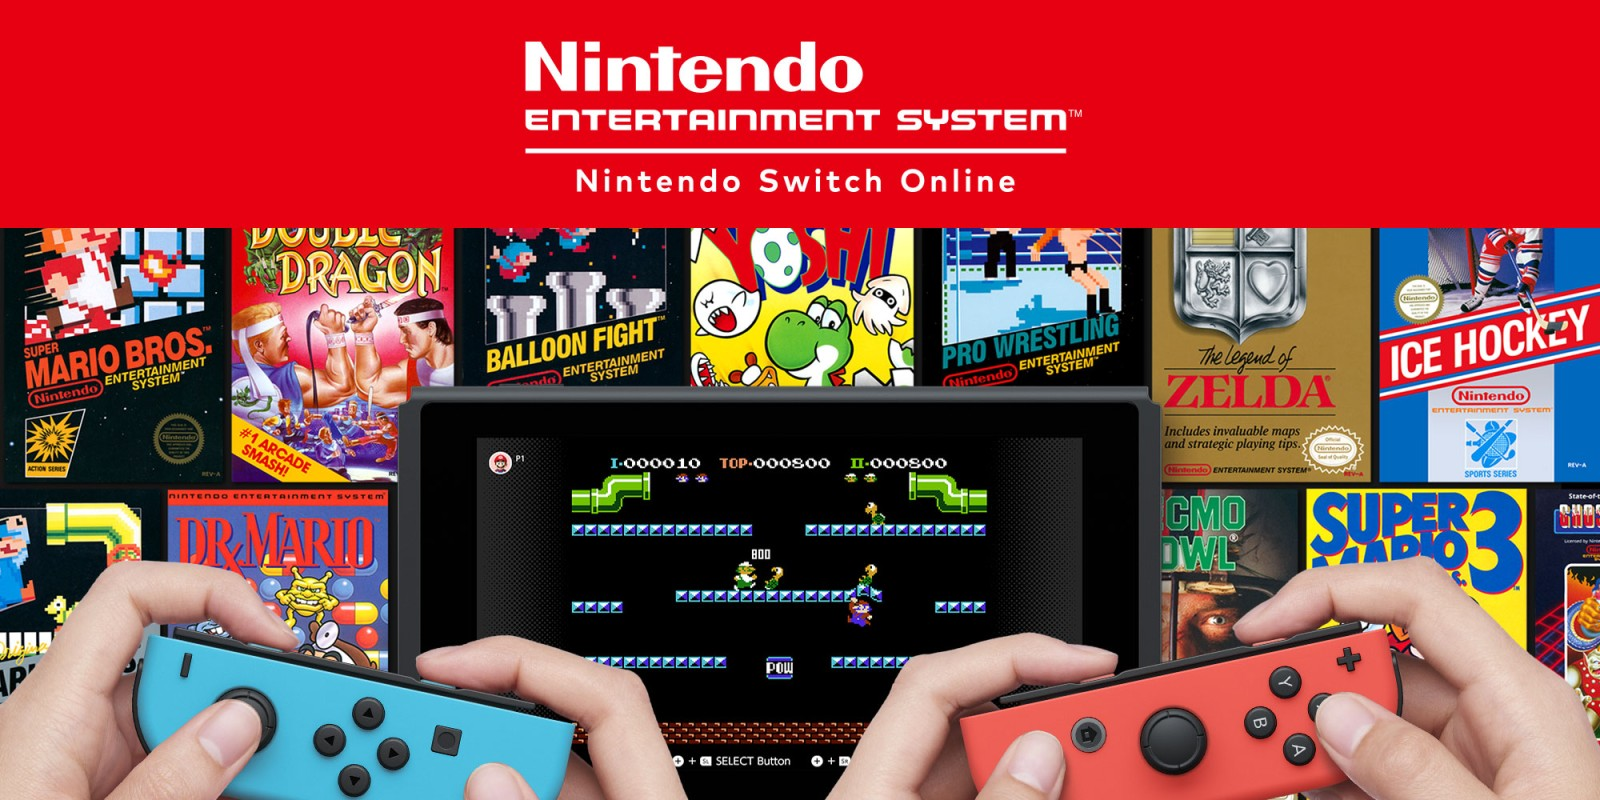 Nintendo Entertainment System - Nintendo Switch